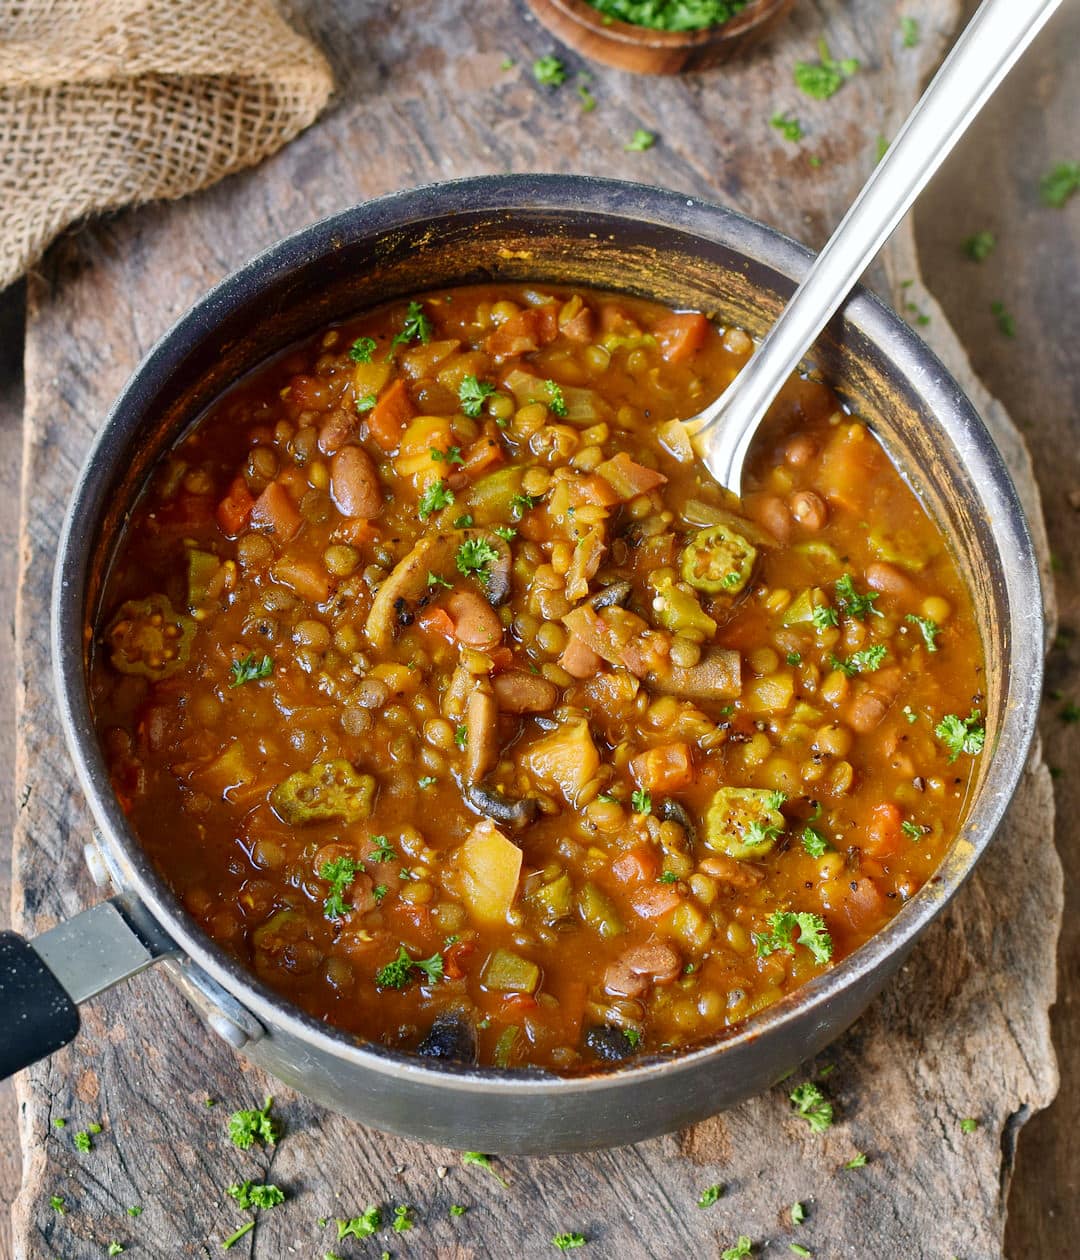 Vegan gumbo with lentils in a pot